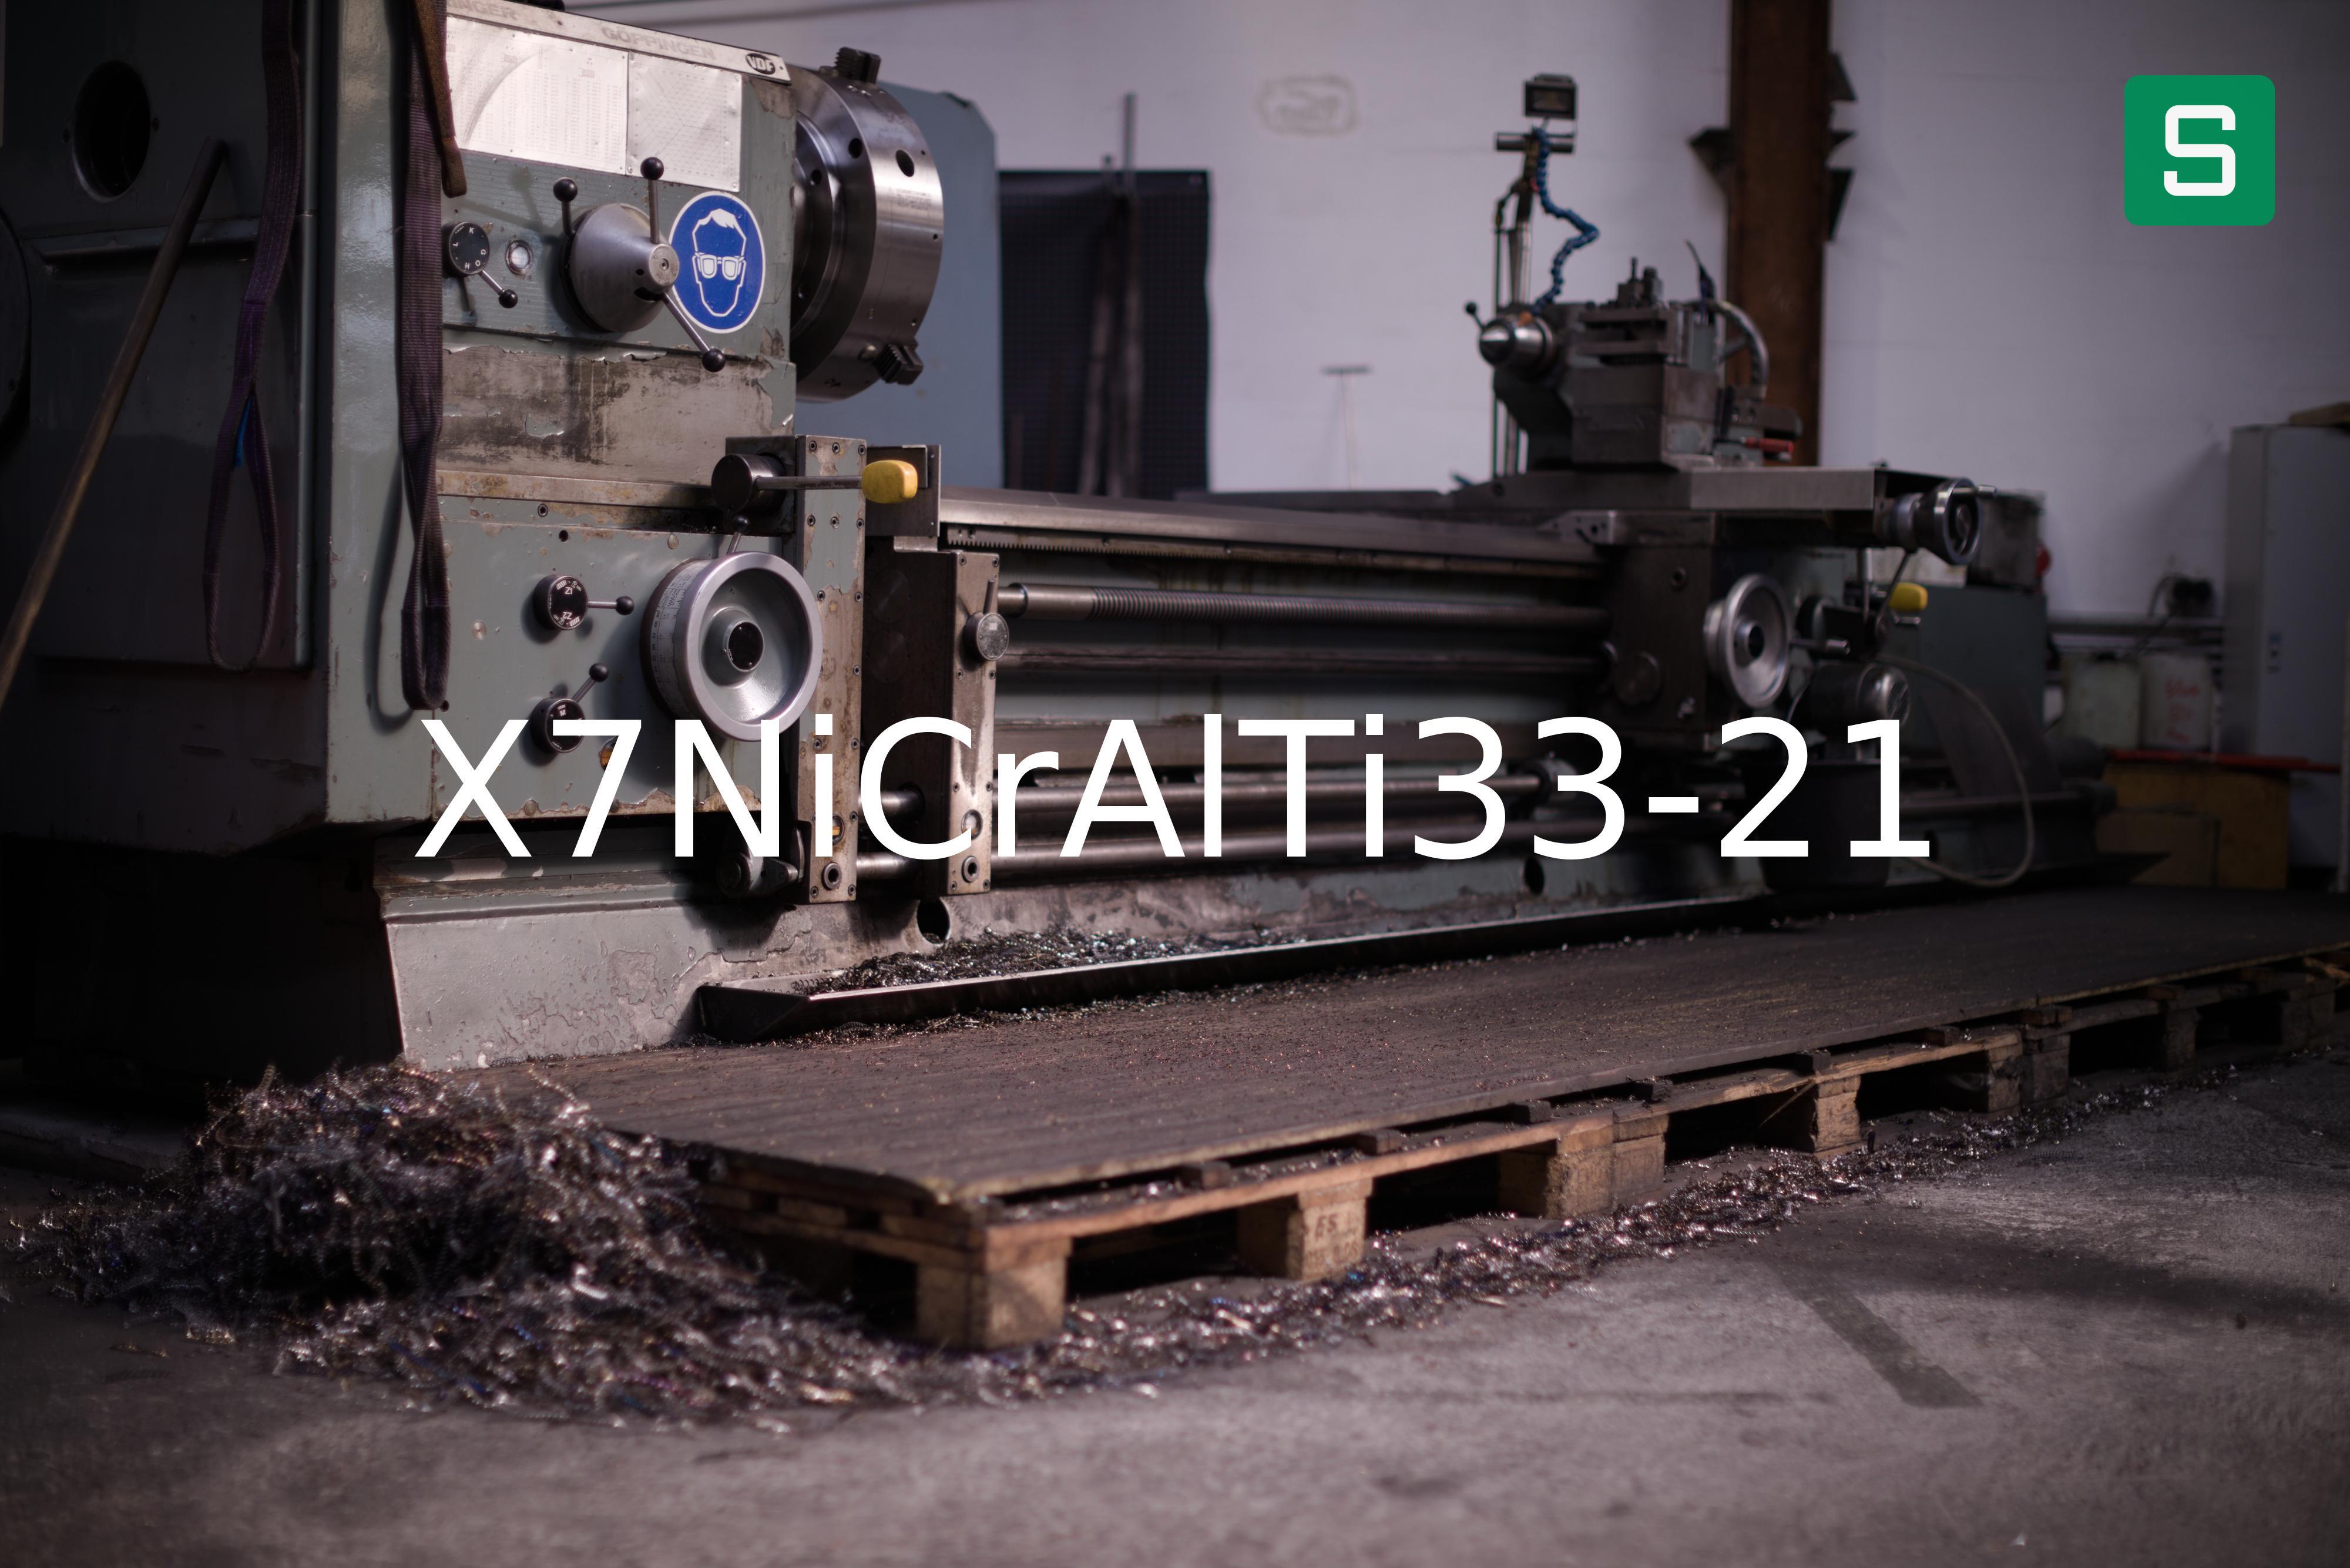 Material de Acero: X7NiCrAlTi33-21